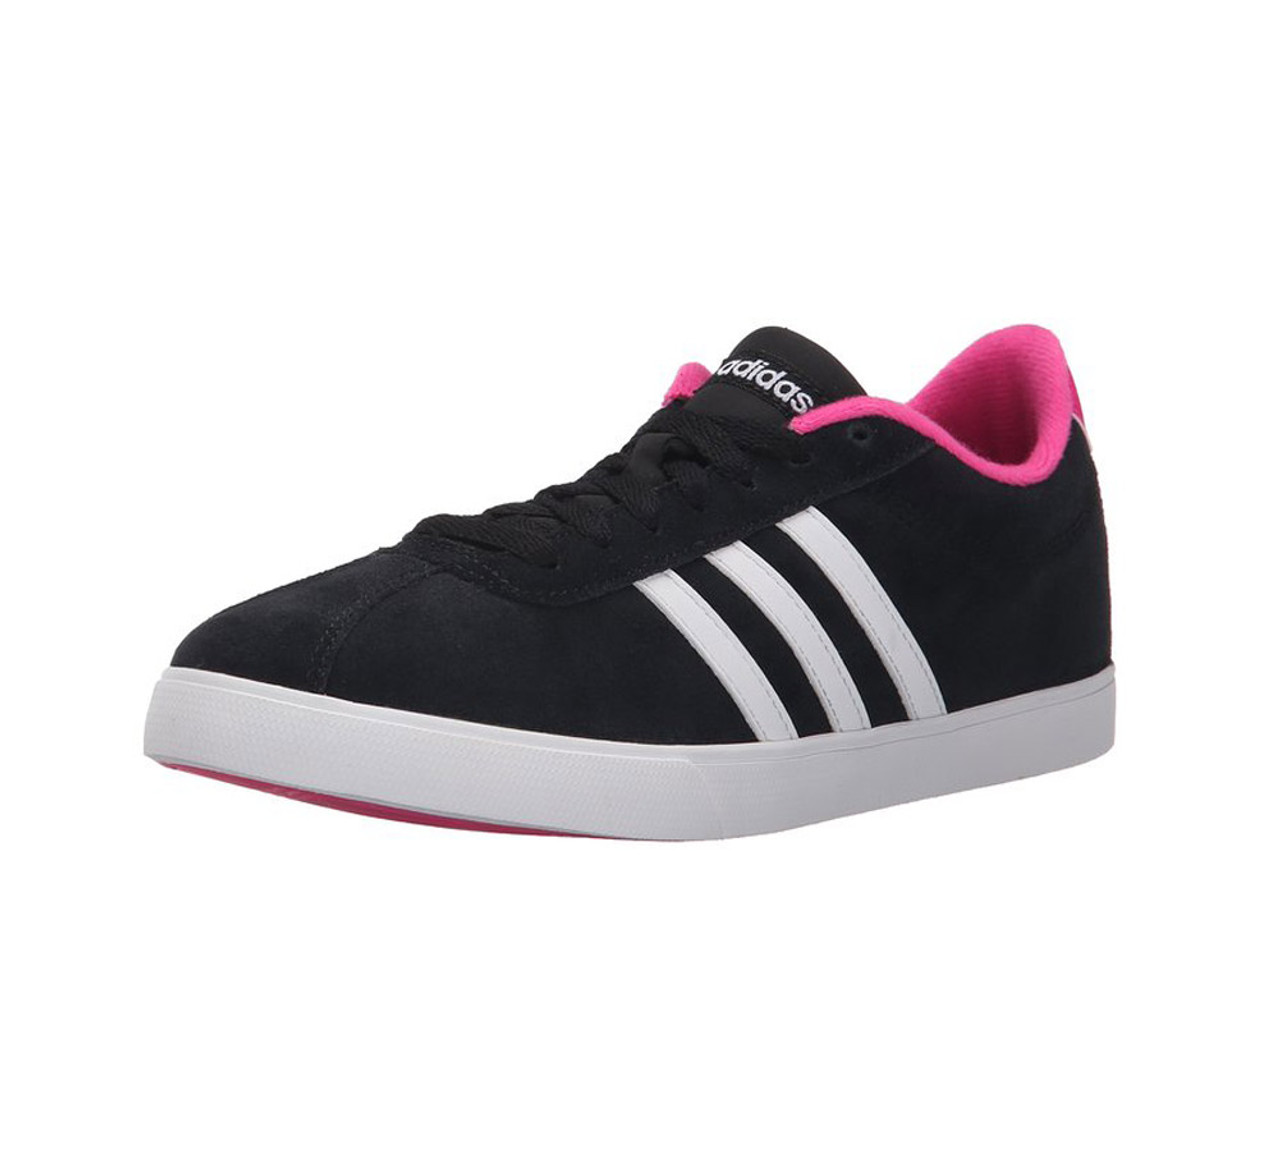 Adidas Neo Women's Courtset Sneaker - Black | Discount Adidas Ladies  Athletic Shoe & More - Shoolu.com | Shoolu.com